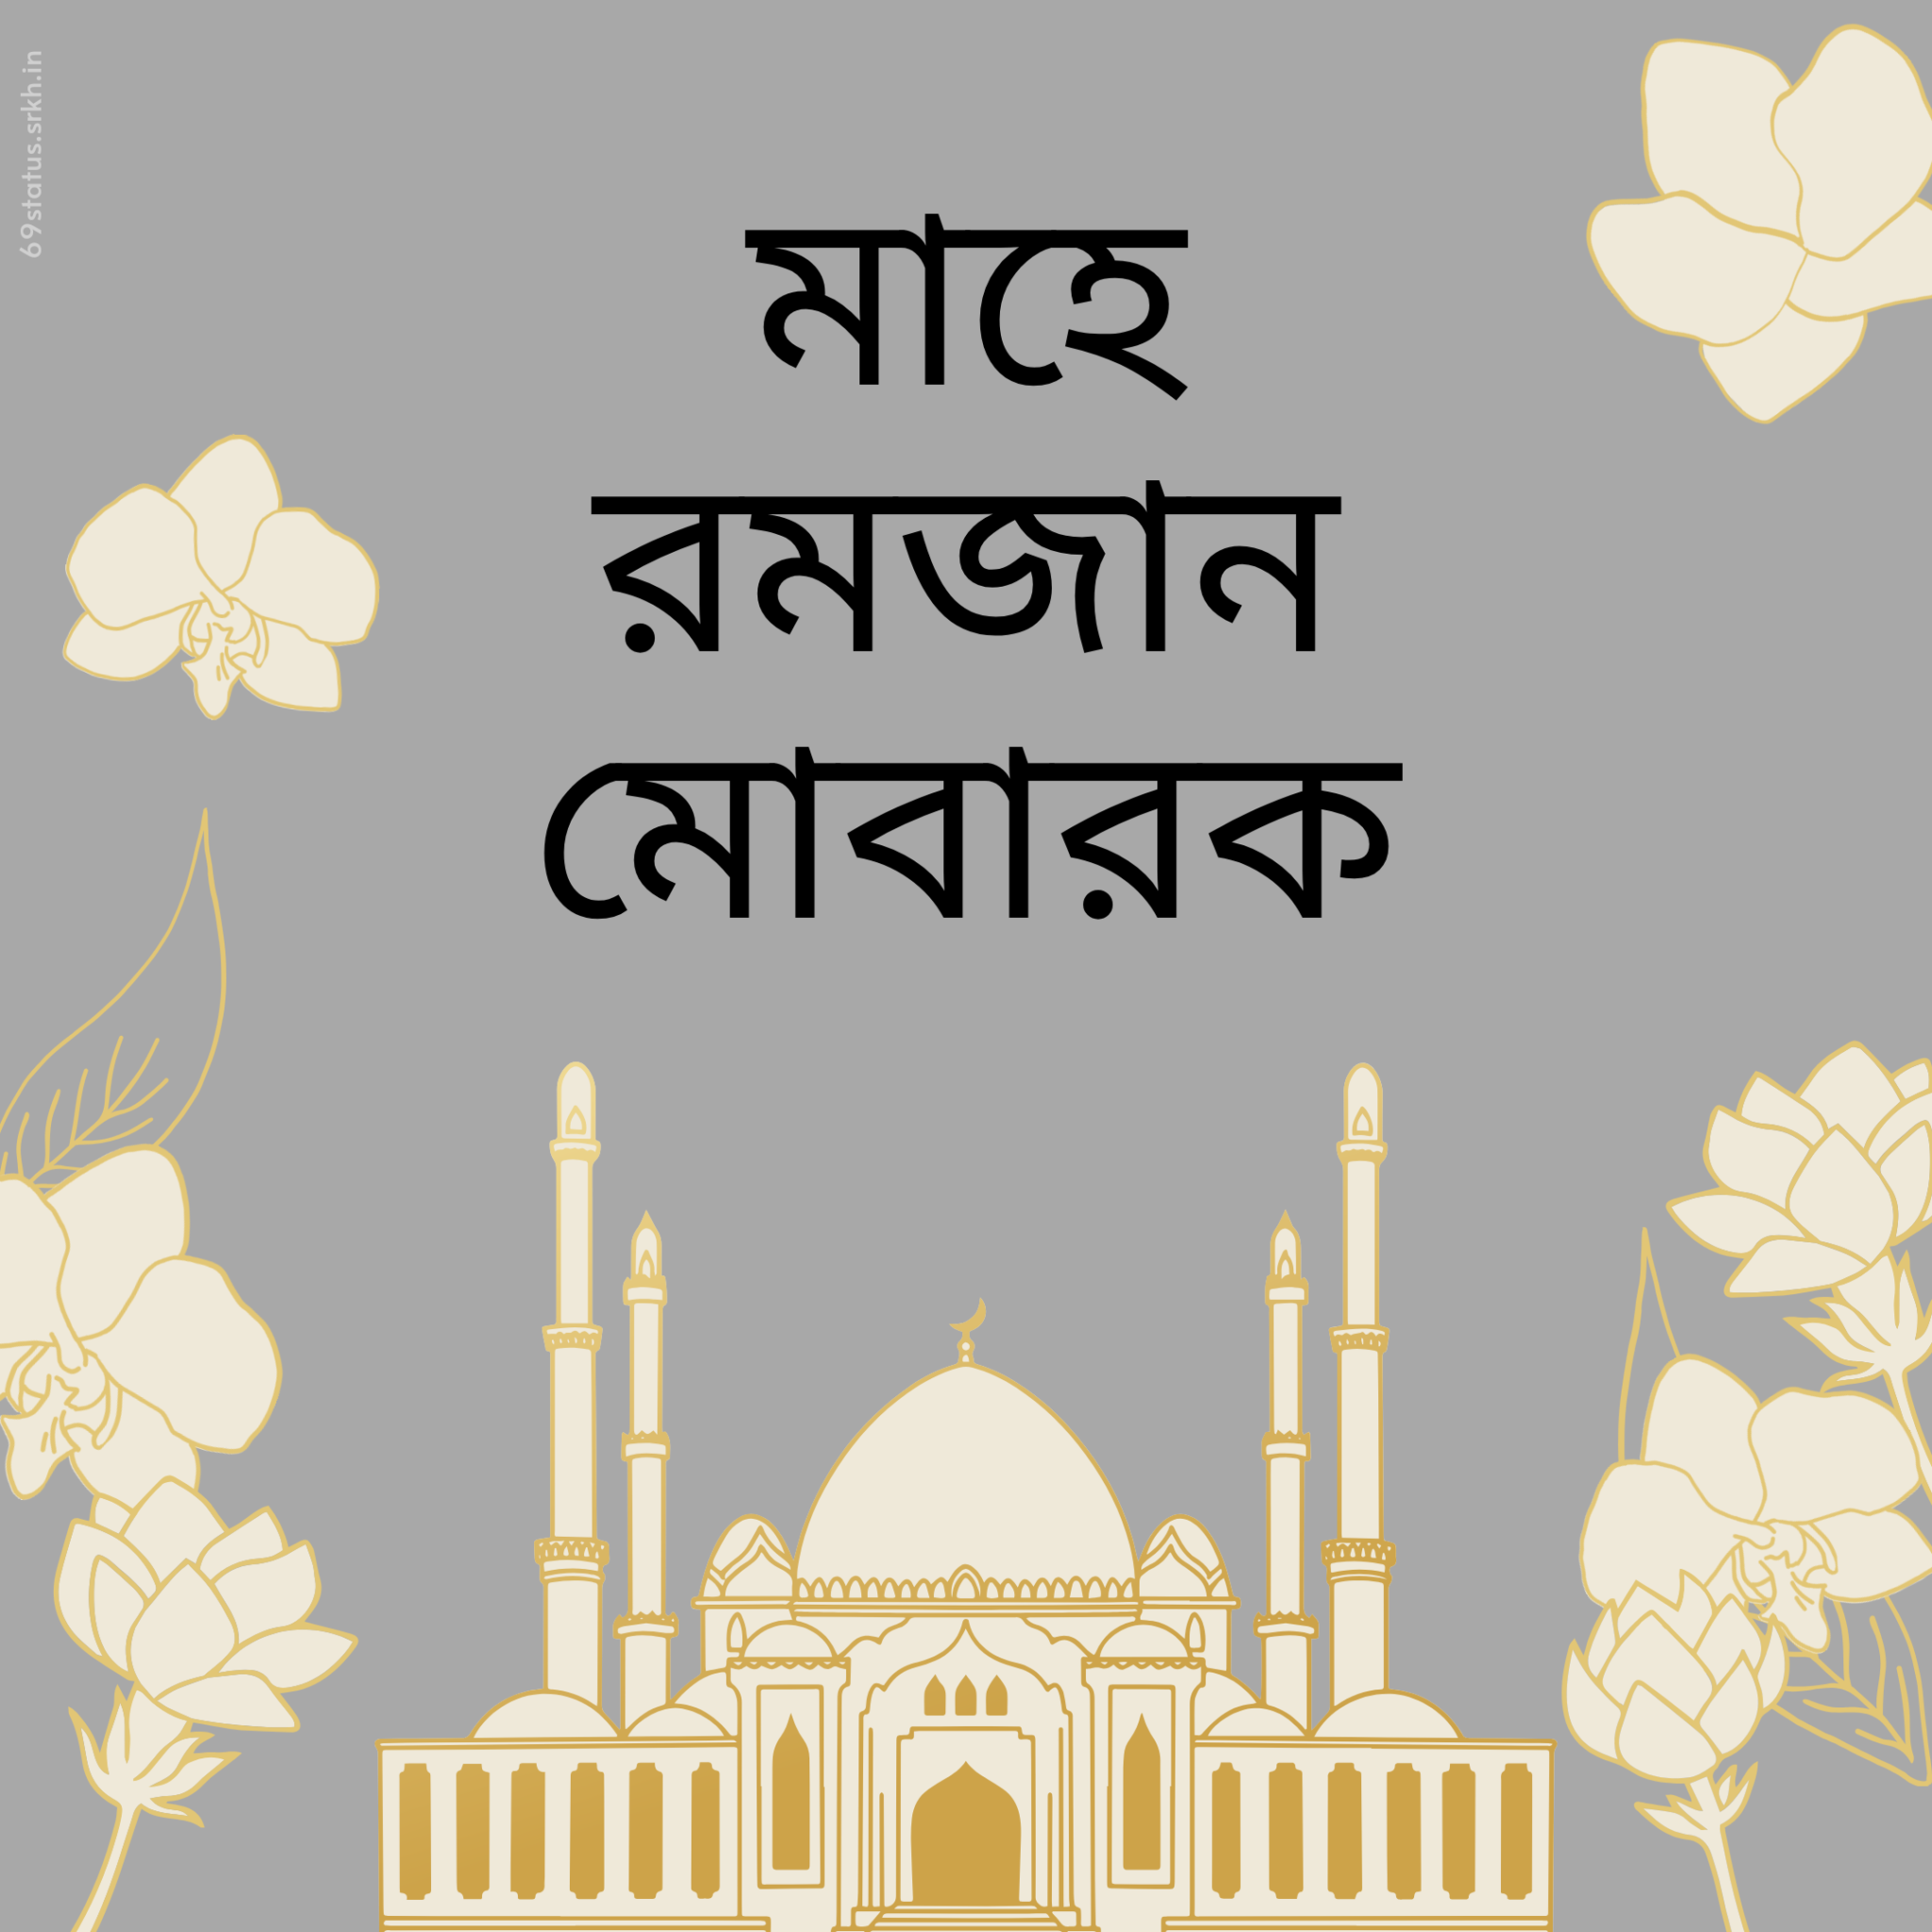 Bengali Ramdan Eid Mubarak pic hd